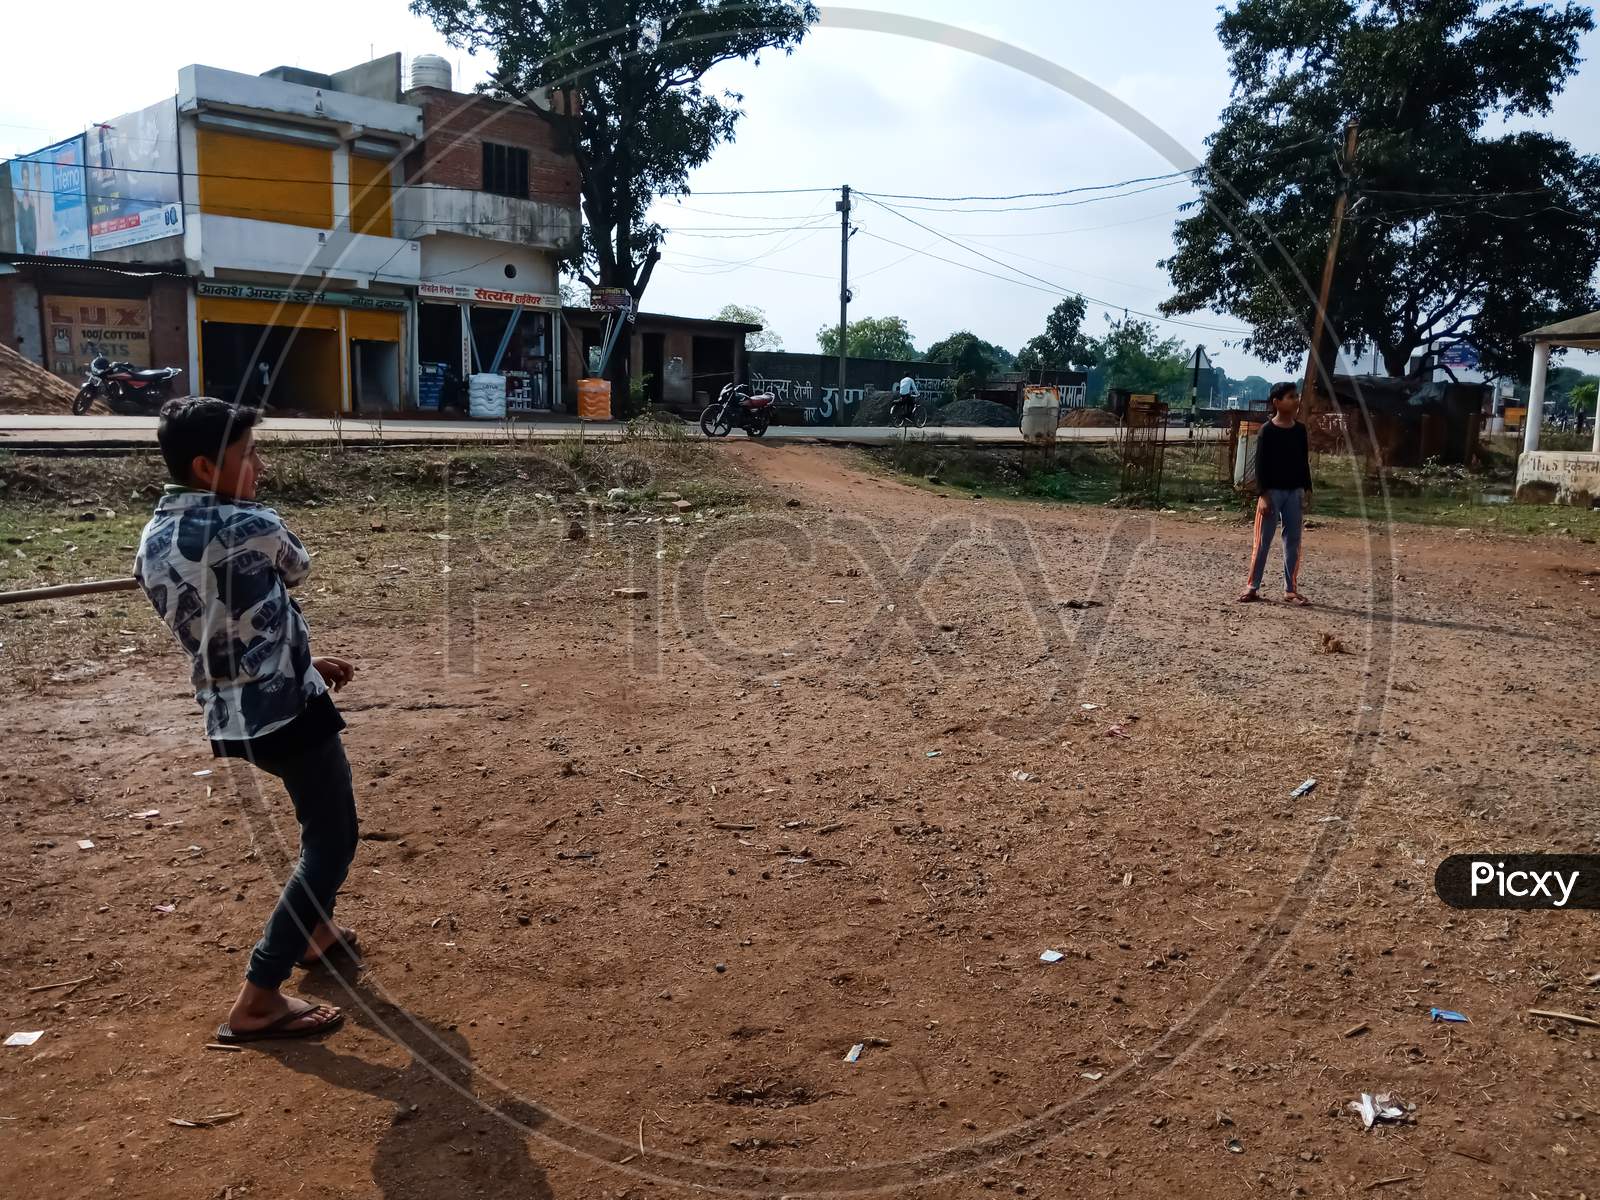 Asian Village Poor Kids Sporty Activity On Field.